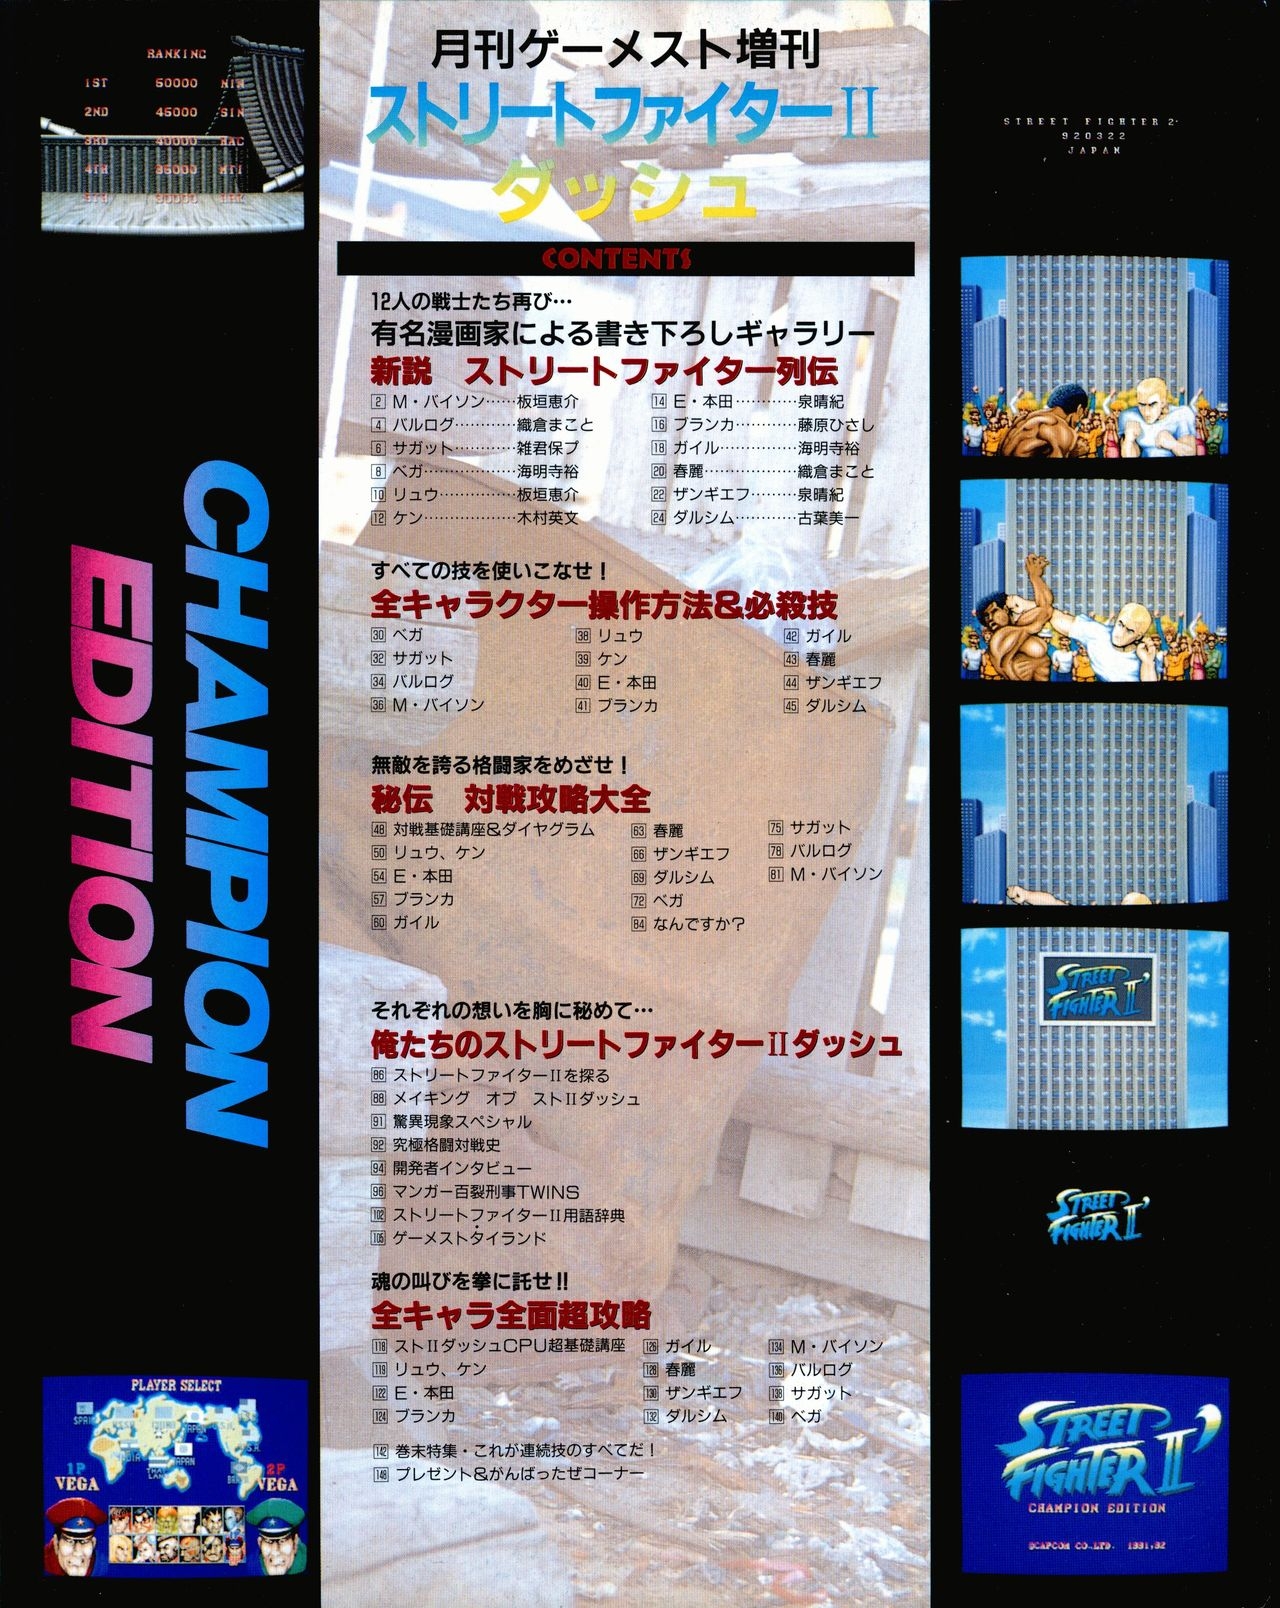 Street Fighter II Dash - Gamest special issue 77 1